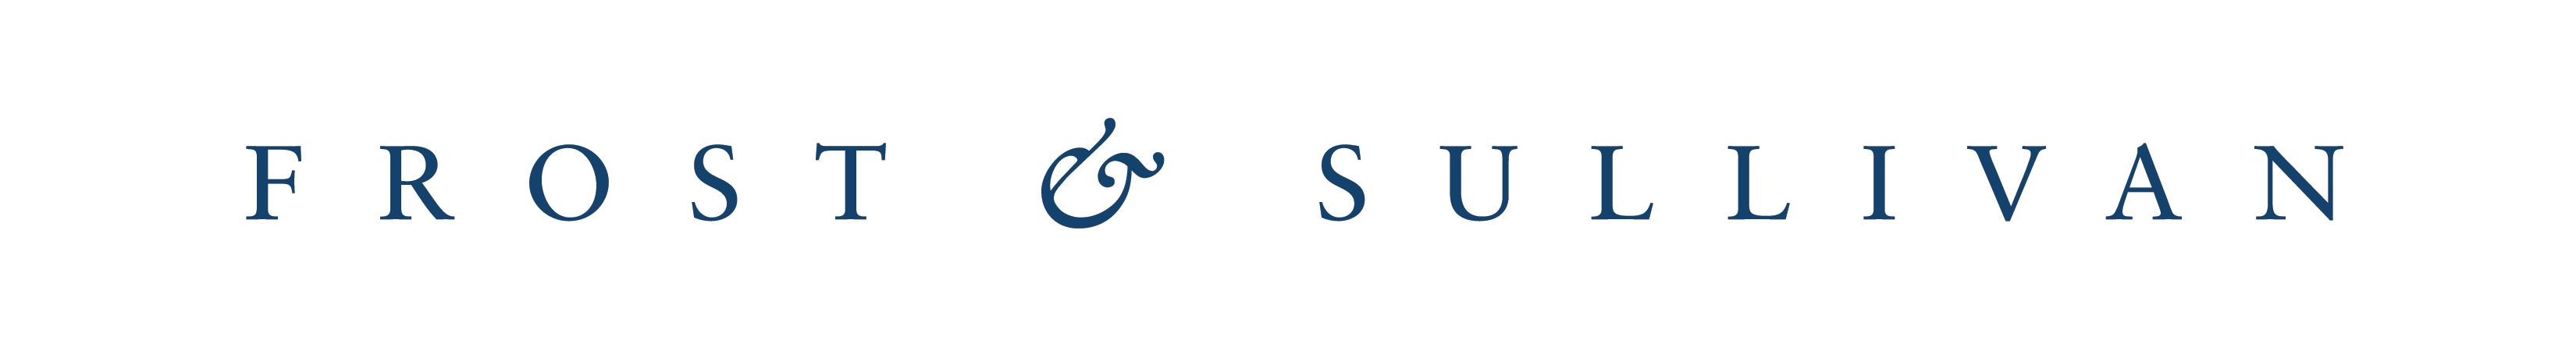 Frost & Sullivan Logo (White Background)